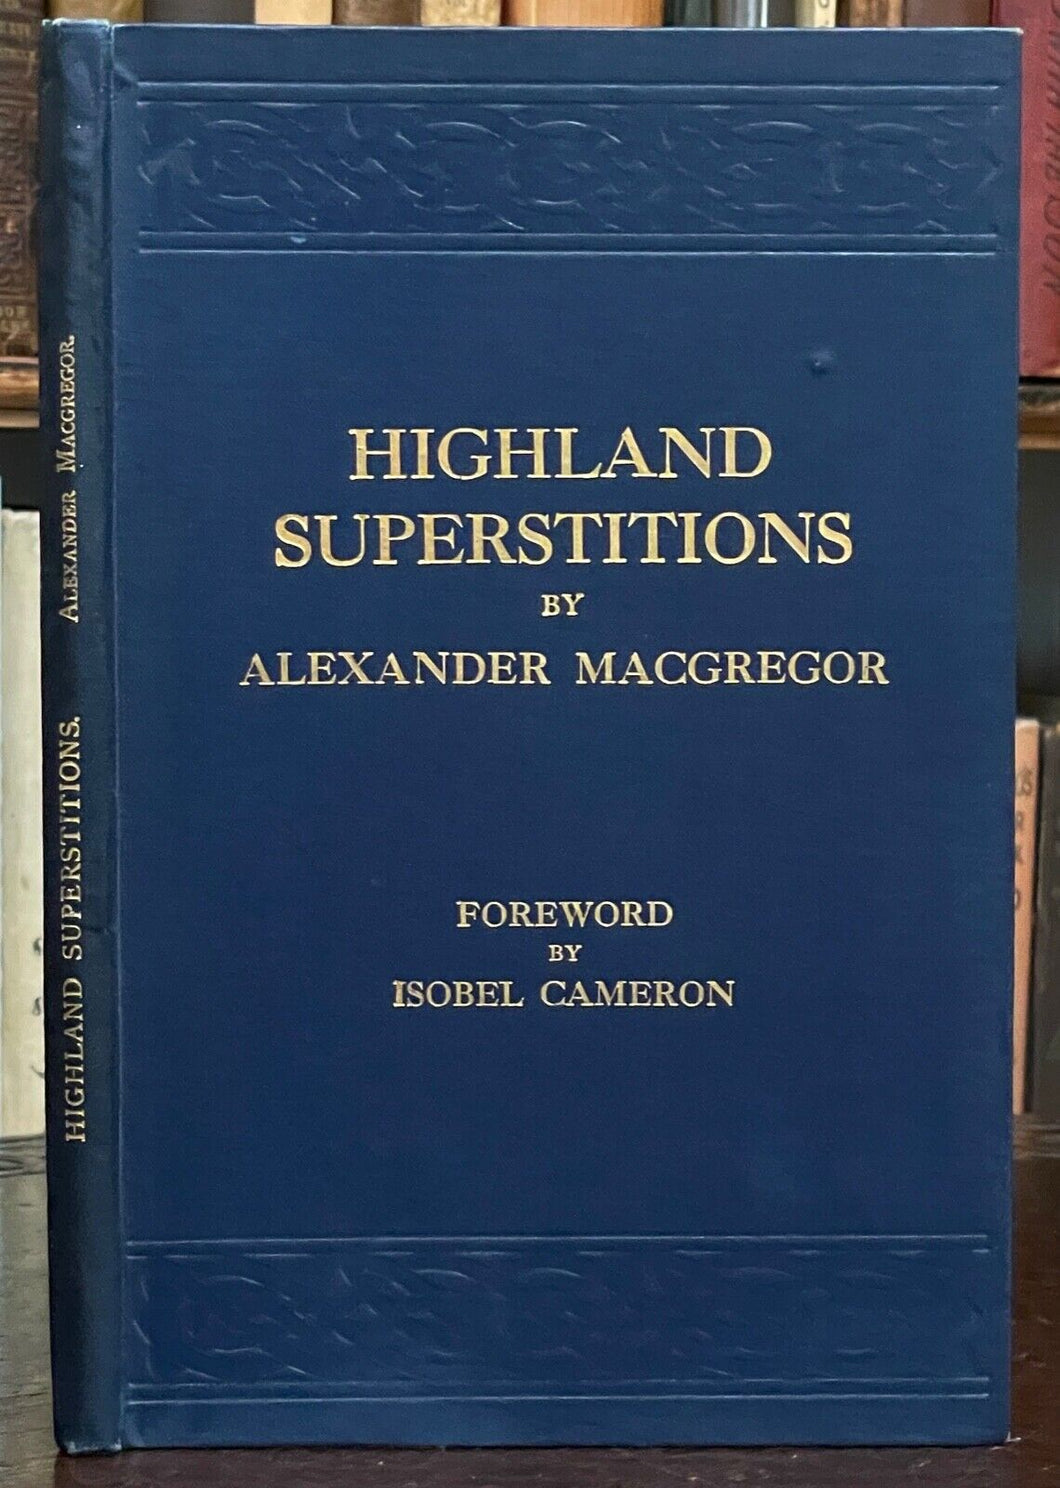 HIGHLAND SUPERSTITIONS - 1922 - WITCHCRAFT FAIRIES MAGICK DRUIDS HALLOWEEN